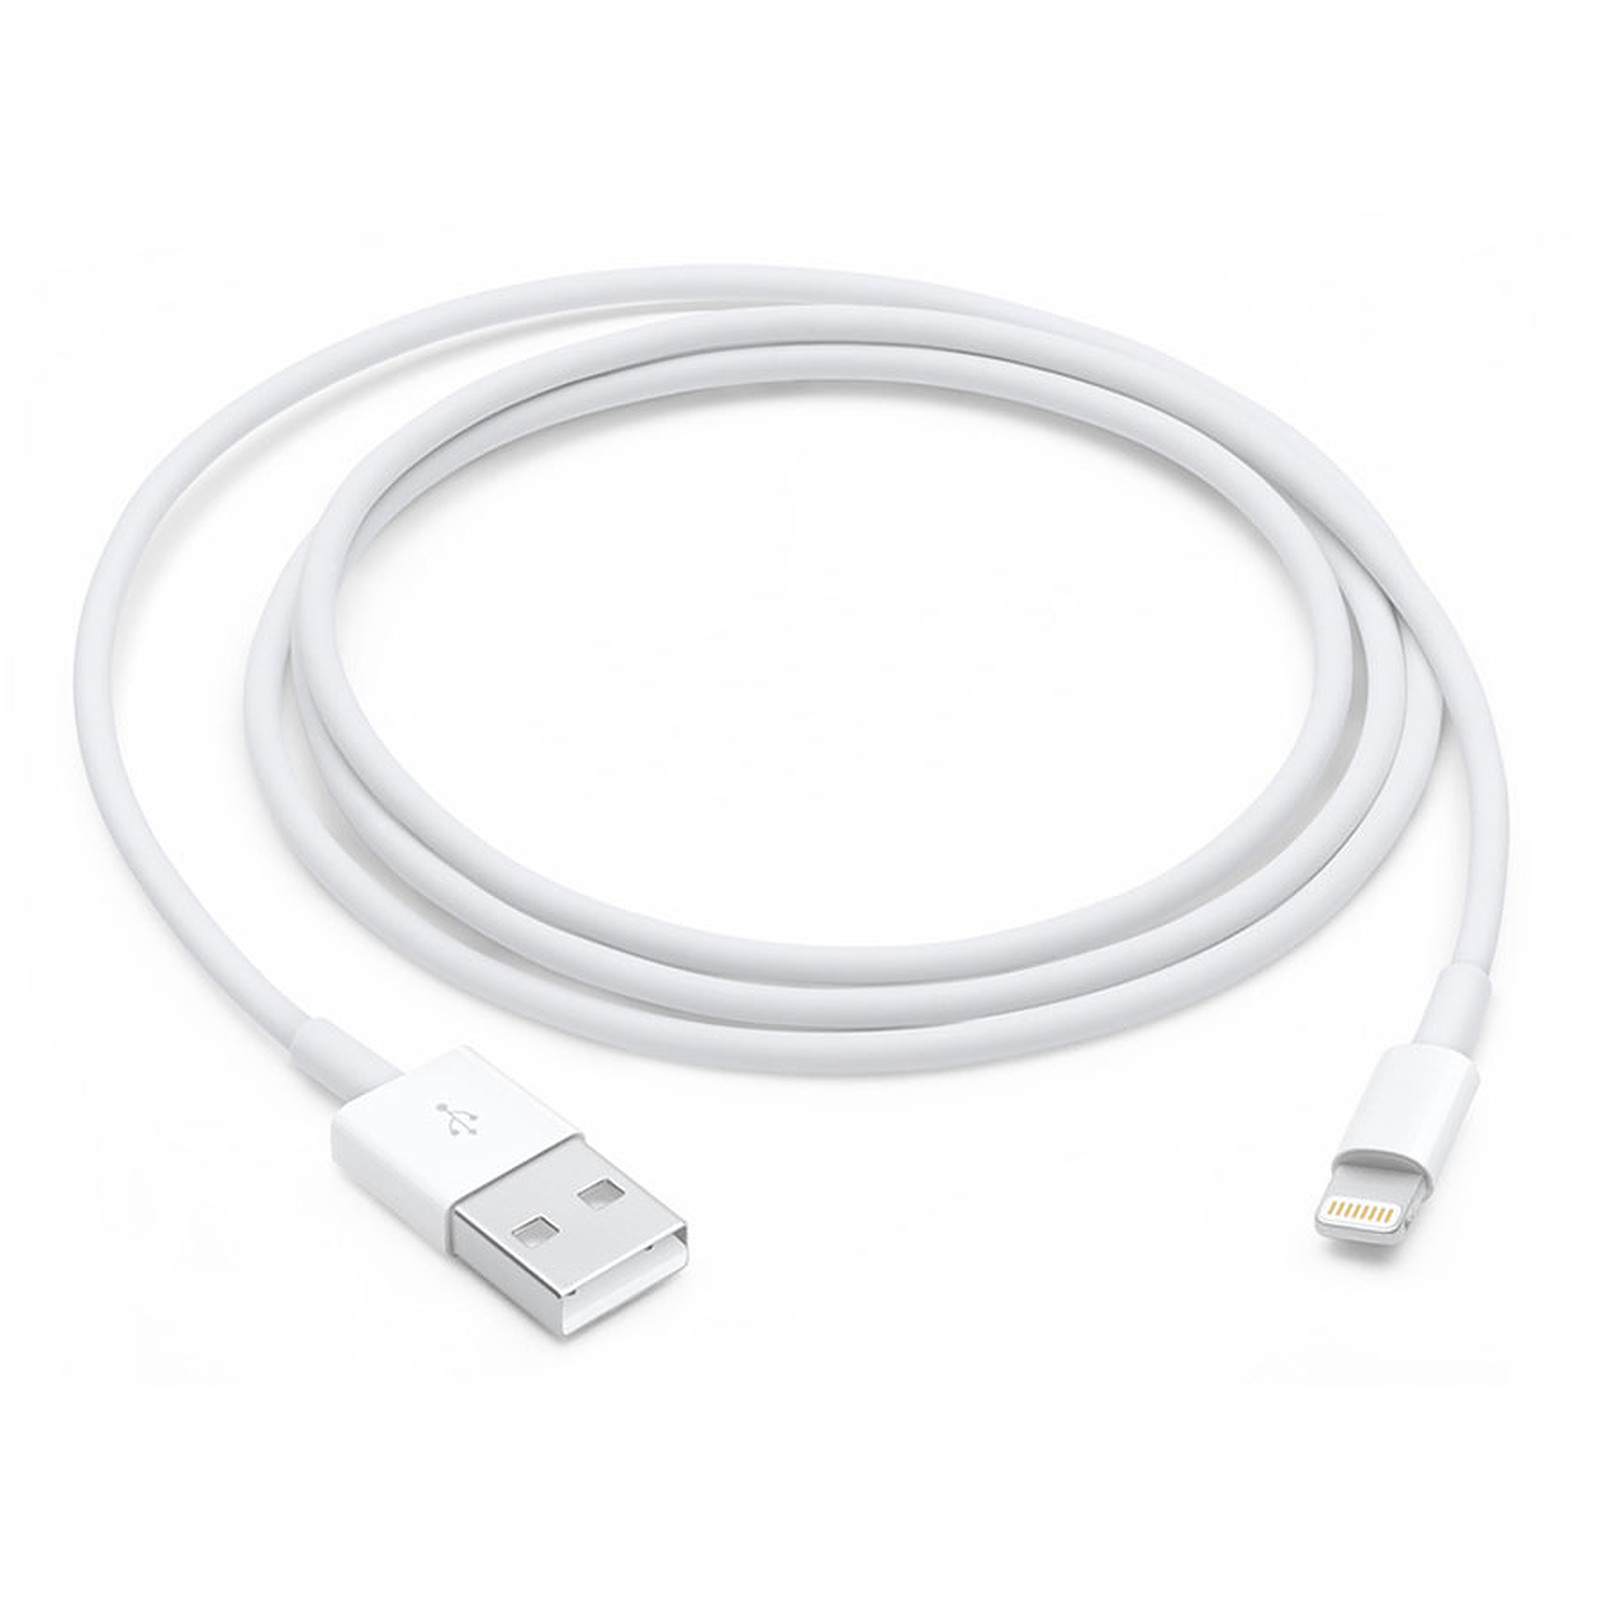 Apple Cable Lightning vers USB - 1 m - Accessoires Apple Apple